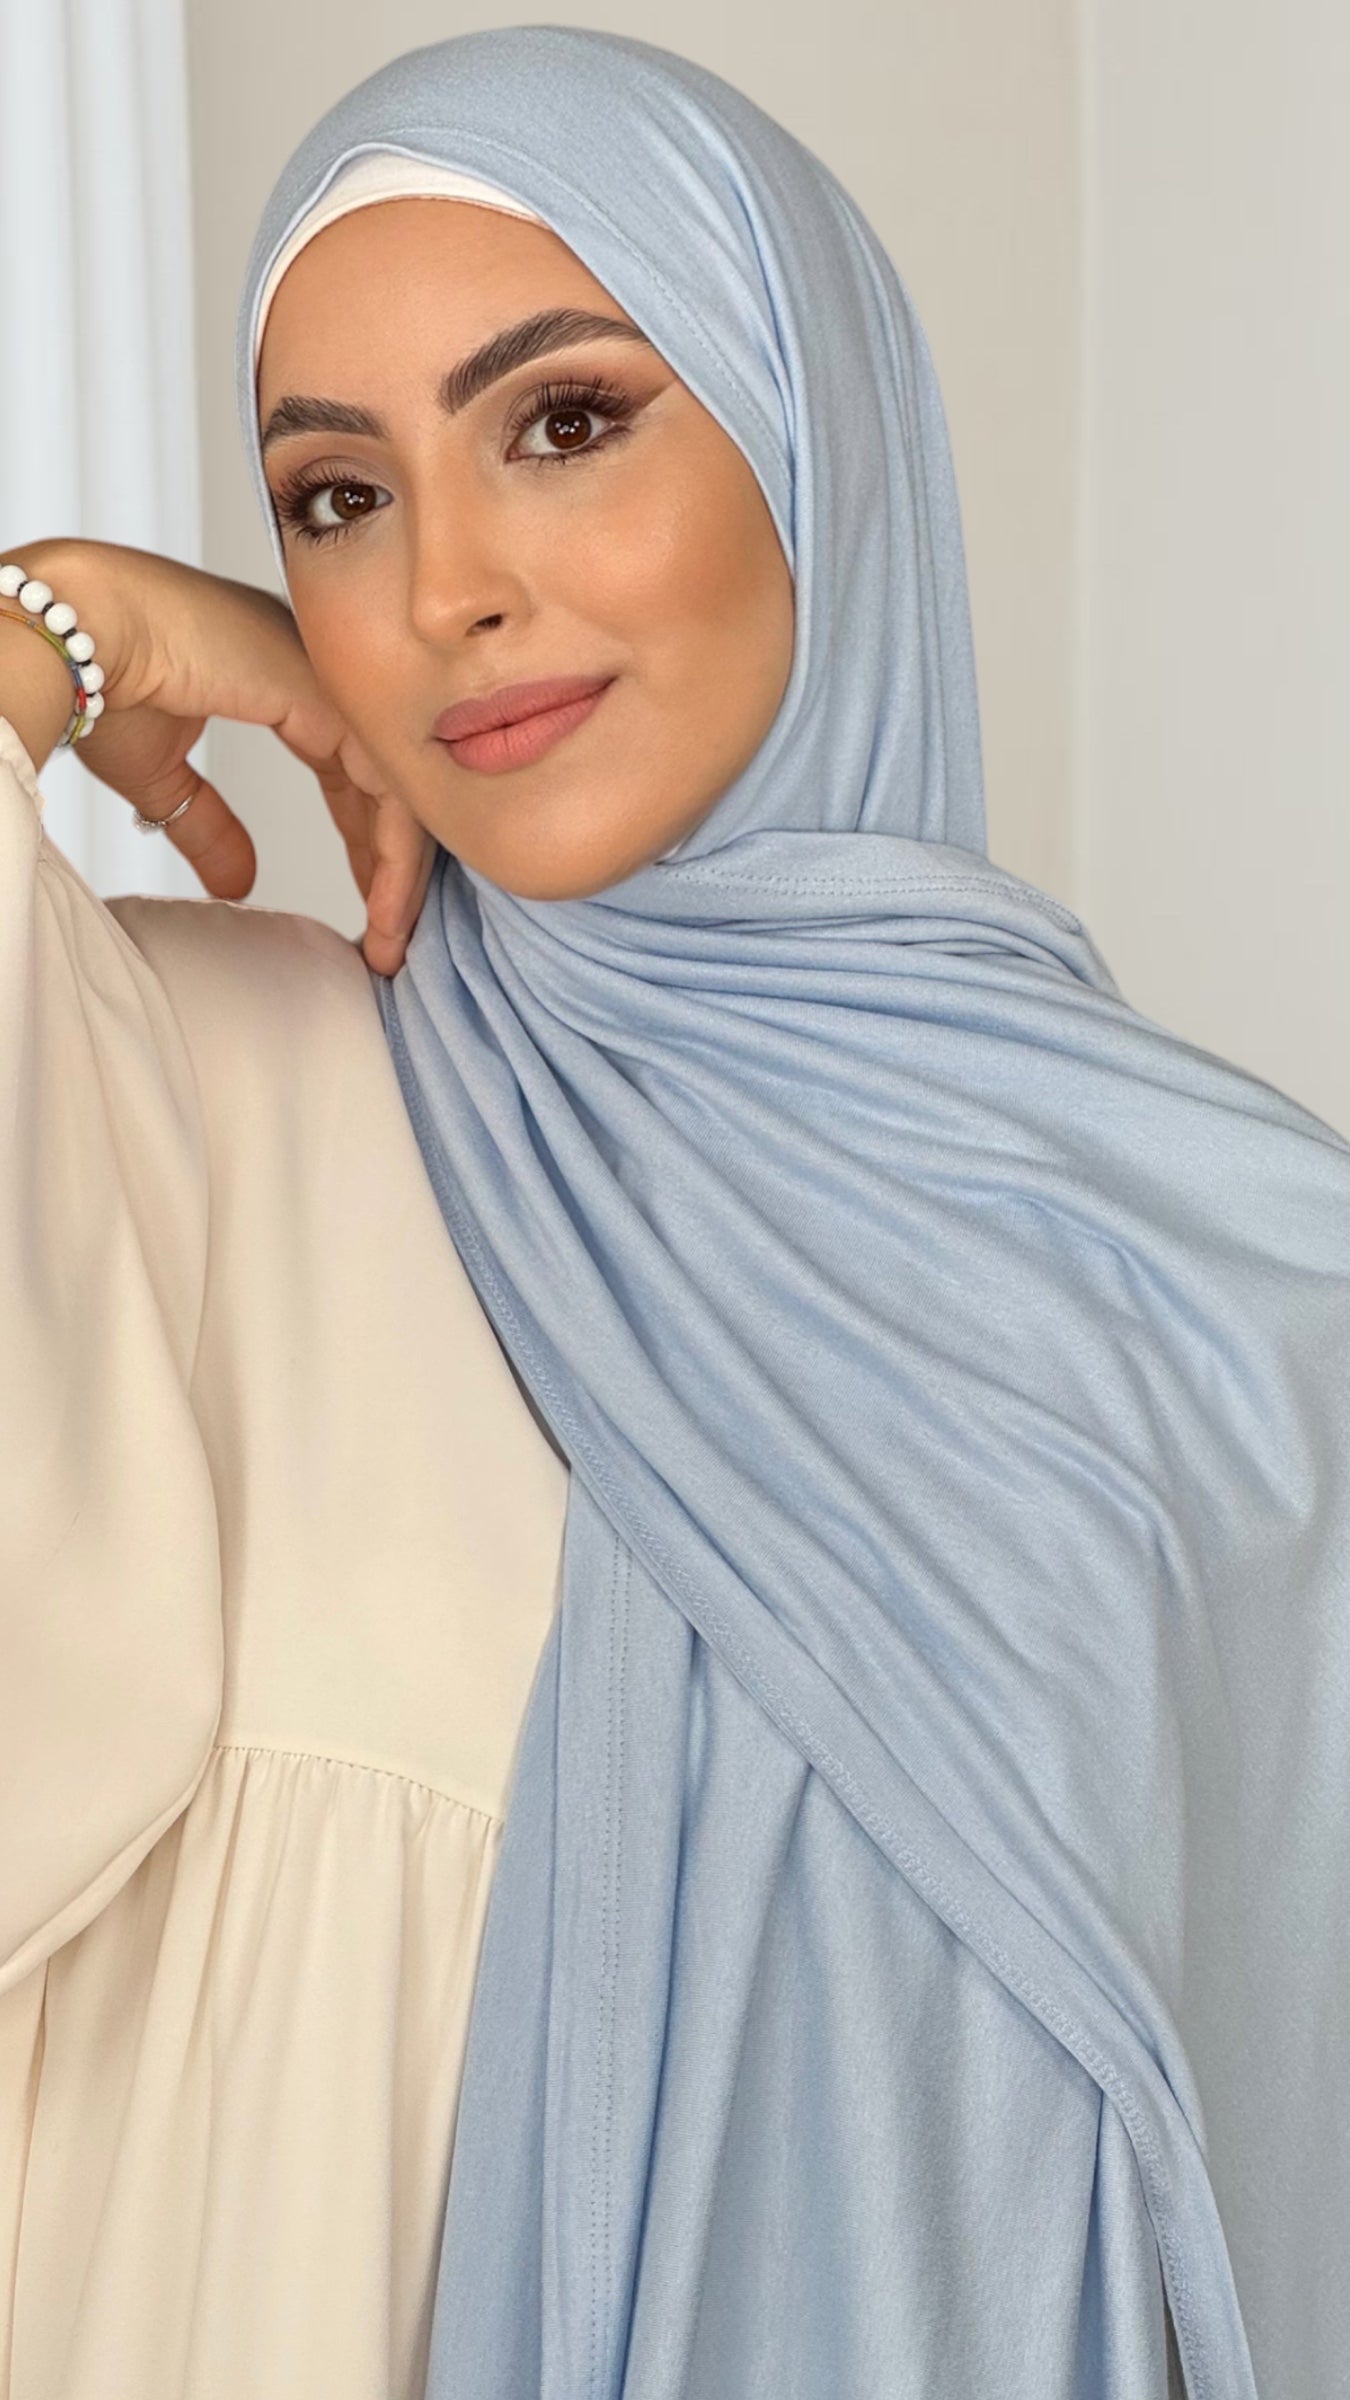 Velo Jersey azzurro - Hijab Paradise Hijab, chador, velo, turbante, foulard, copricapo, musulmano, islamico, sciarpa, 